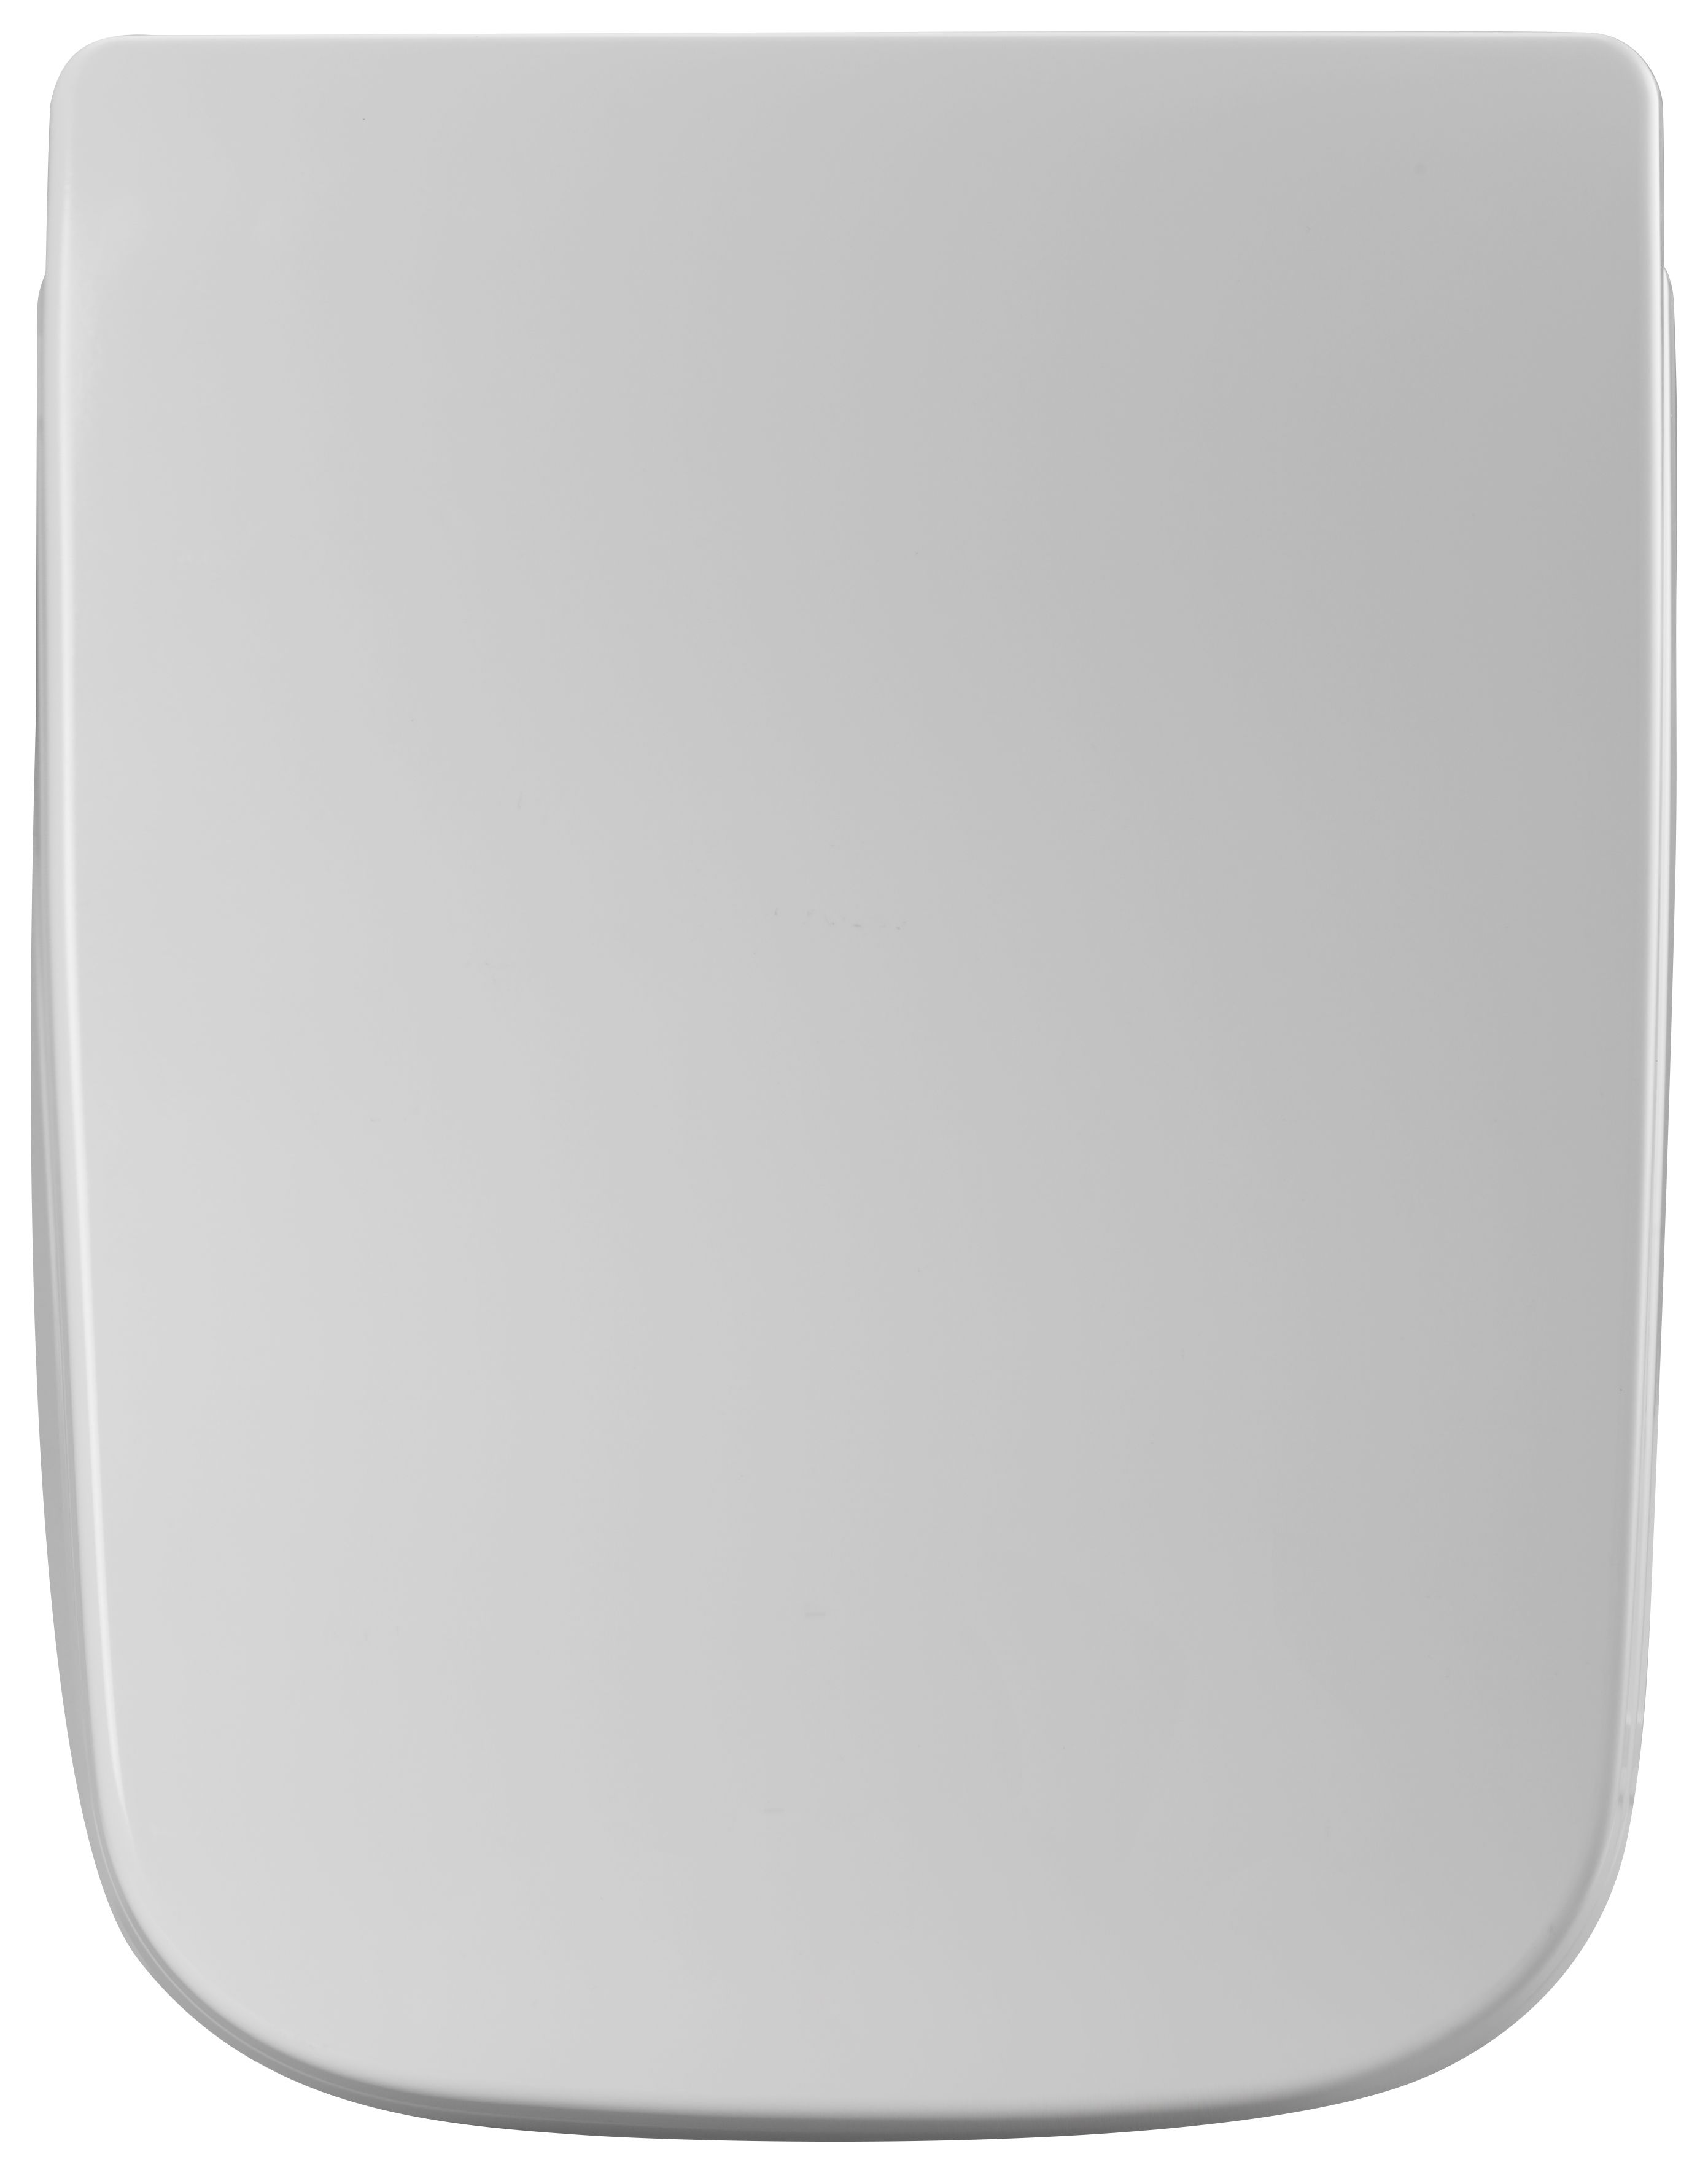 Image of Wickes Square Thermoset Plastic Soft Close Toilet Seat - White